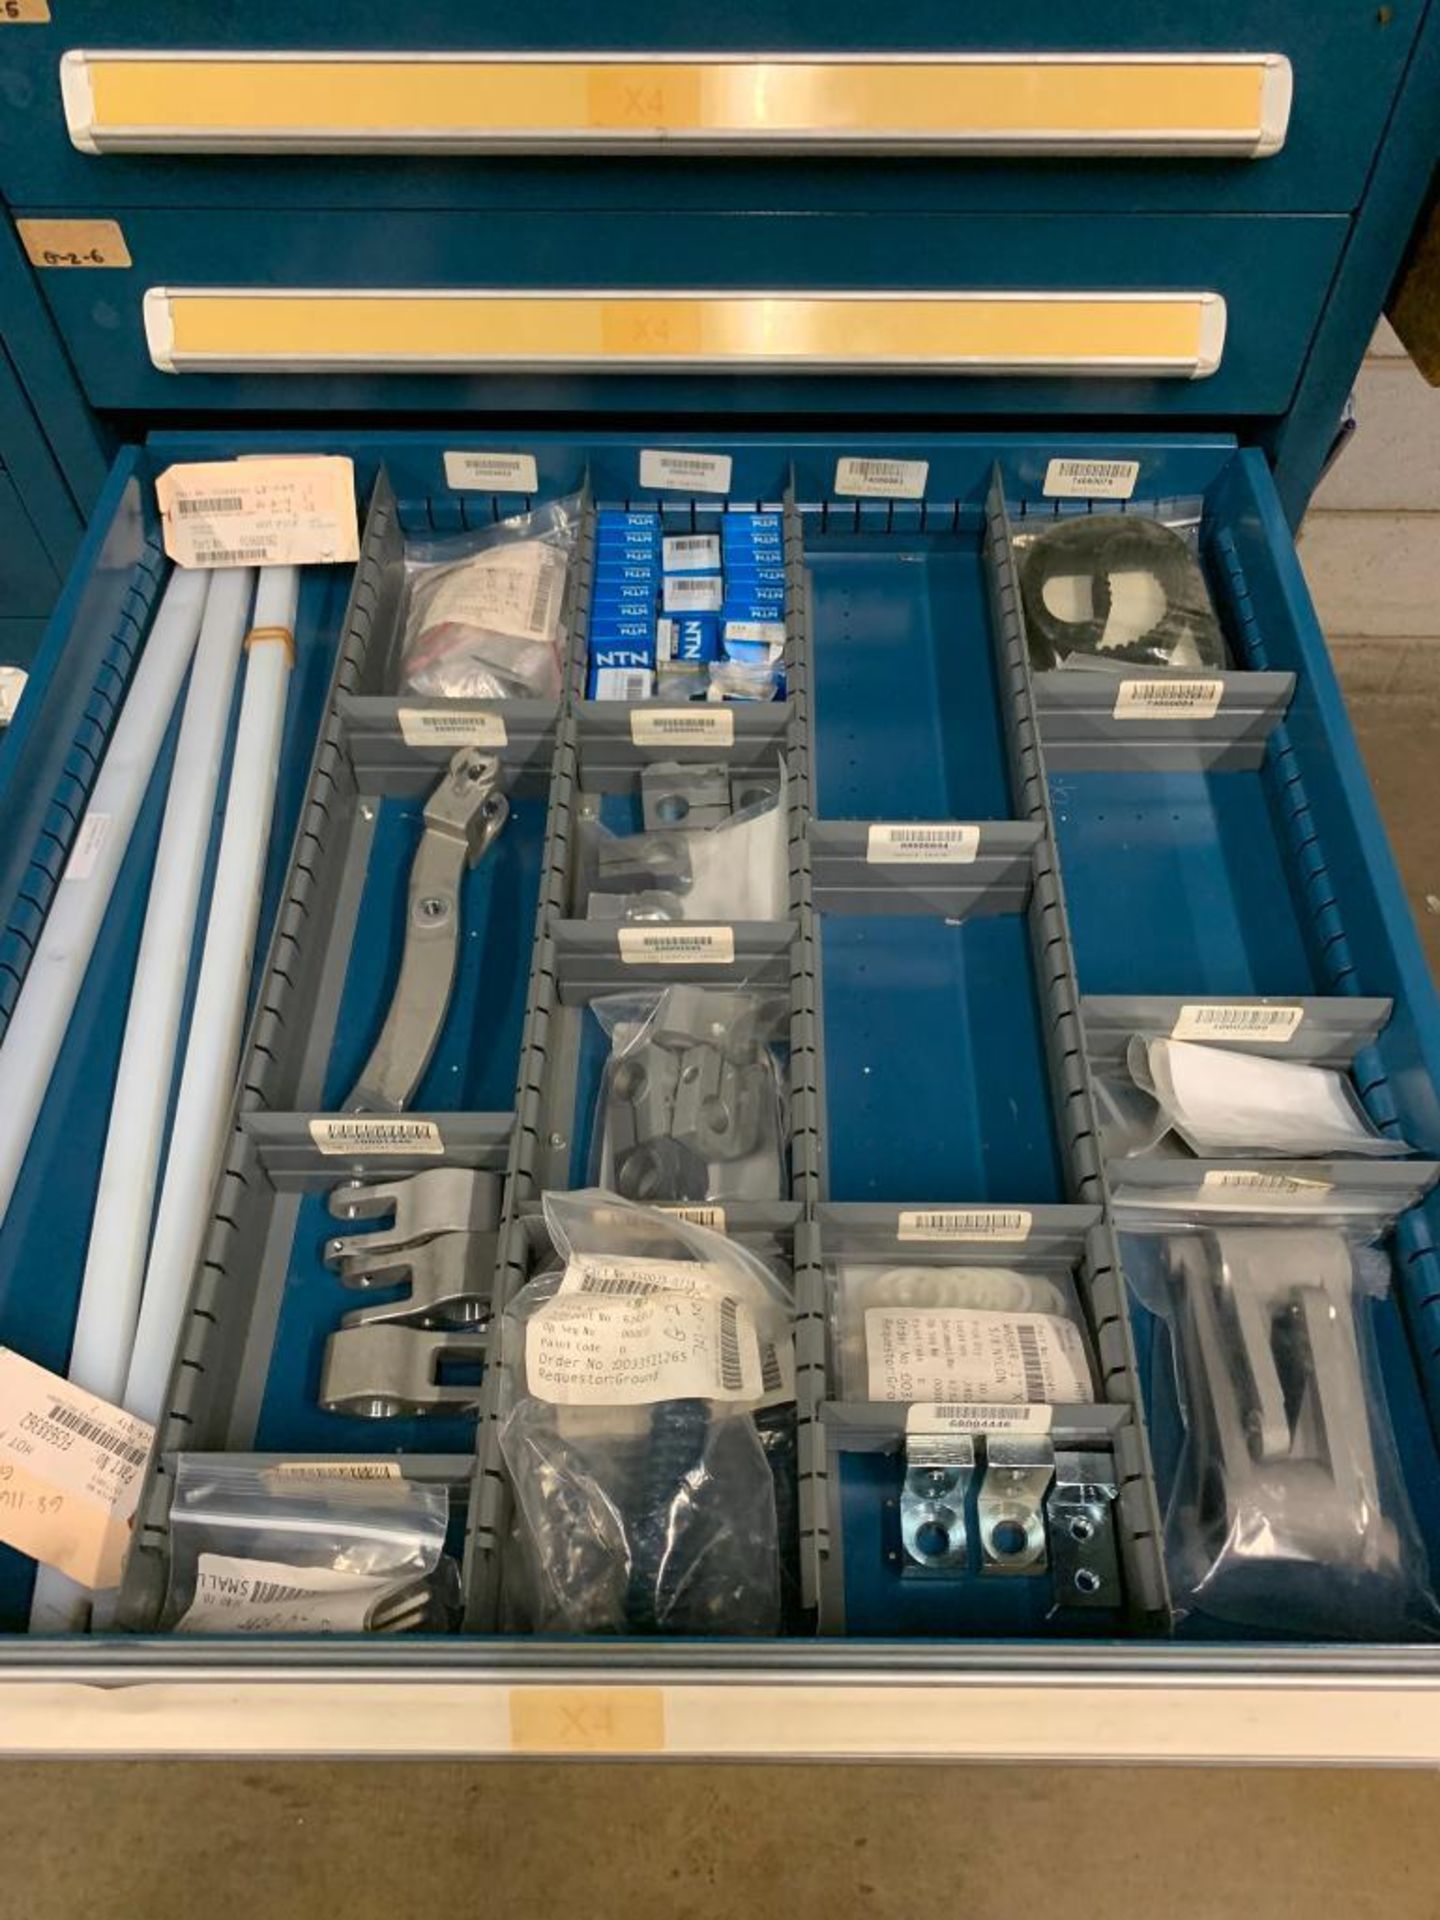 Vidmar 10-Drawer Cabinet, Vidmar Shelf Unit w/ Plant Support Content - Image 8 of 13